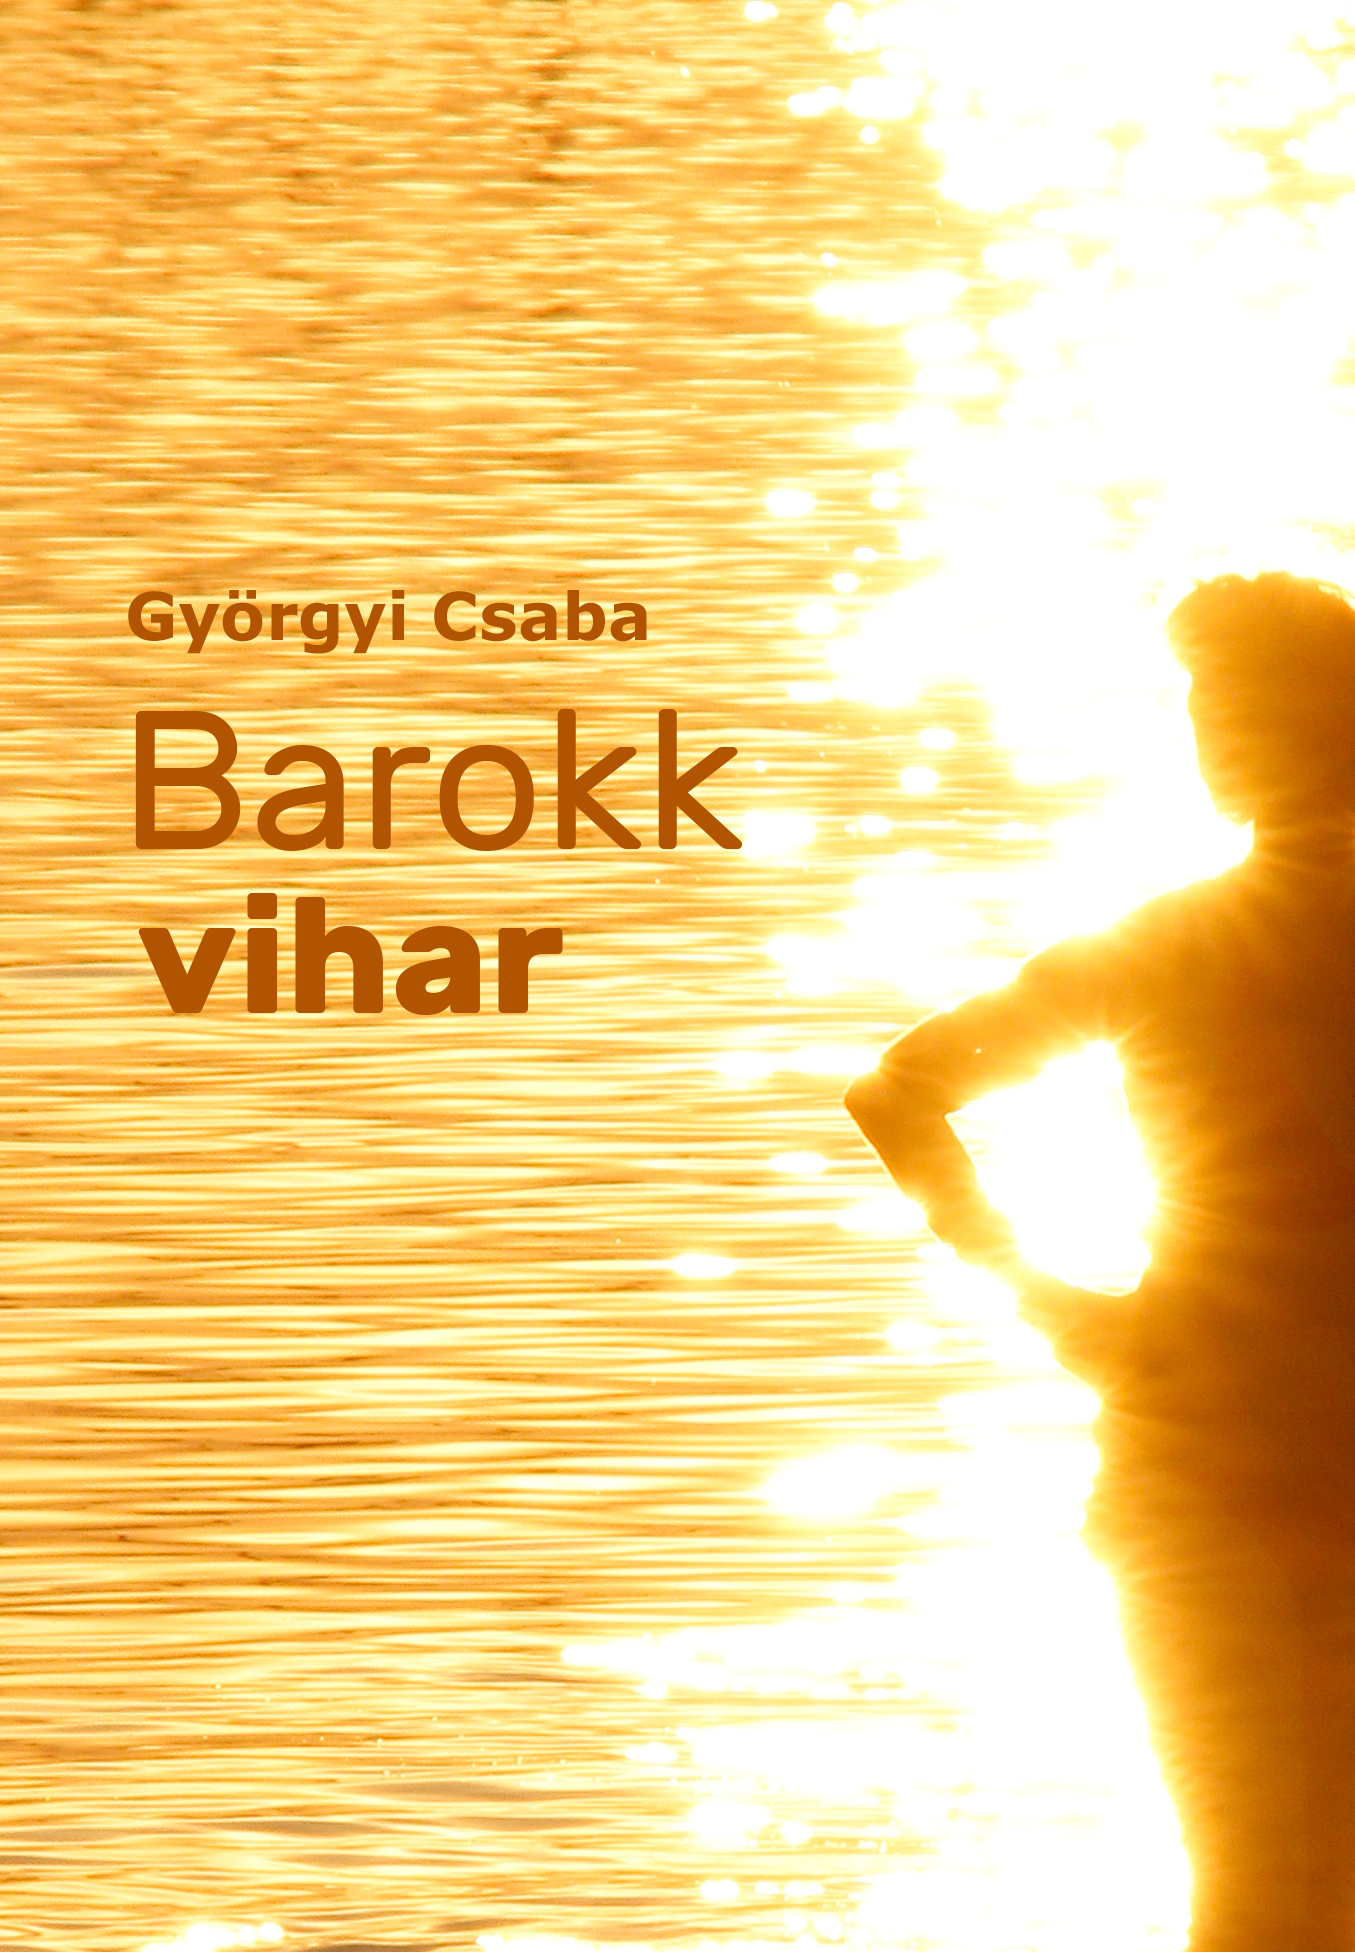 Barokk_vihar_elso_borito-2